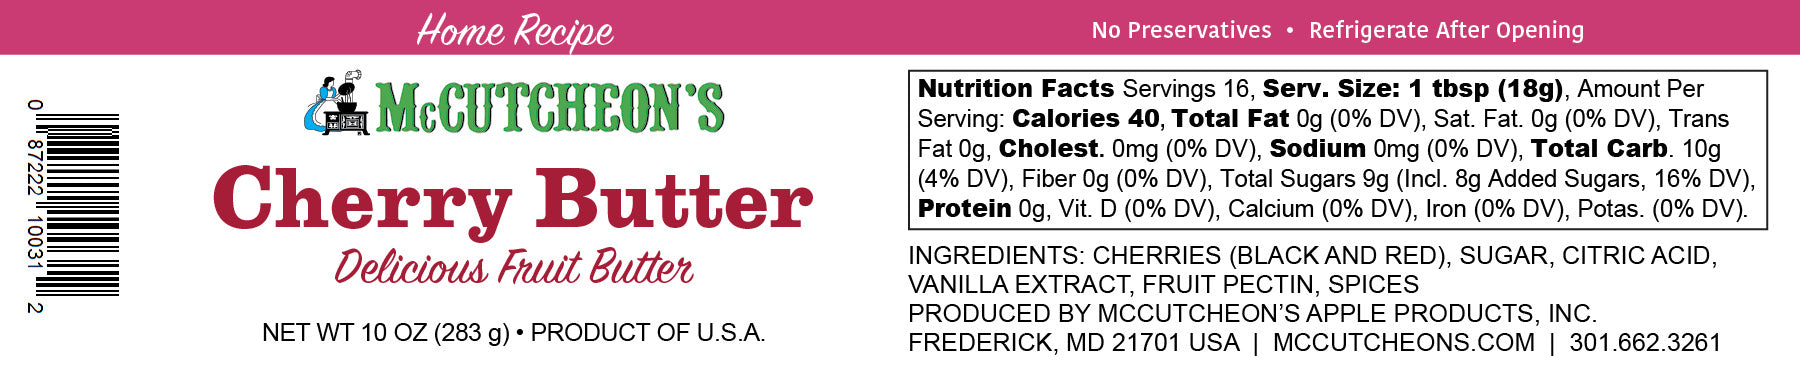 nutritional label for McCutcheon's mini Cherry Butter